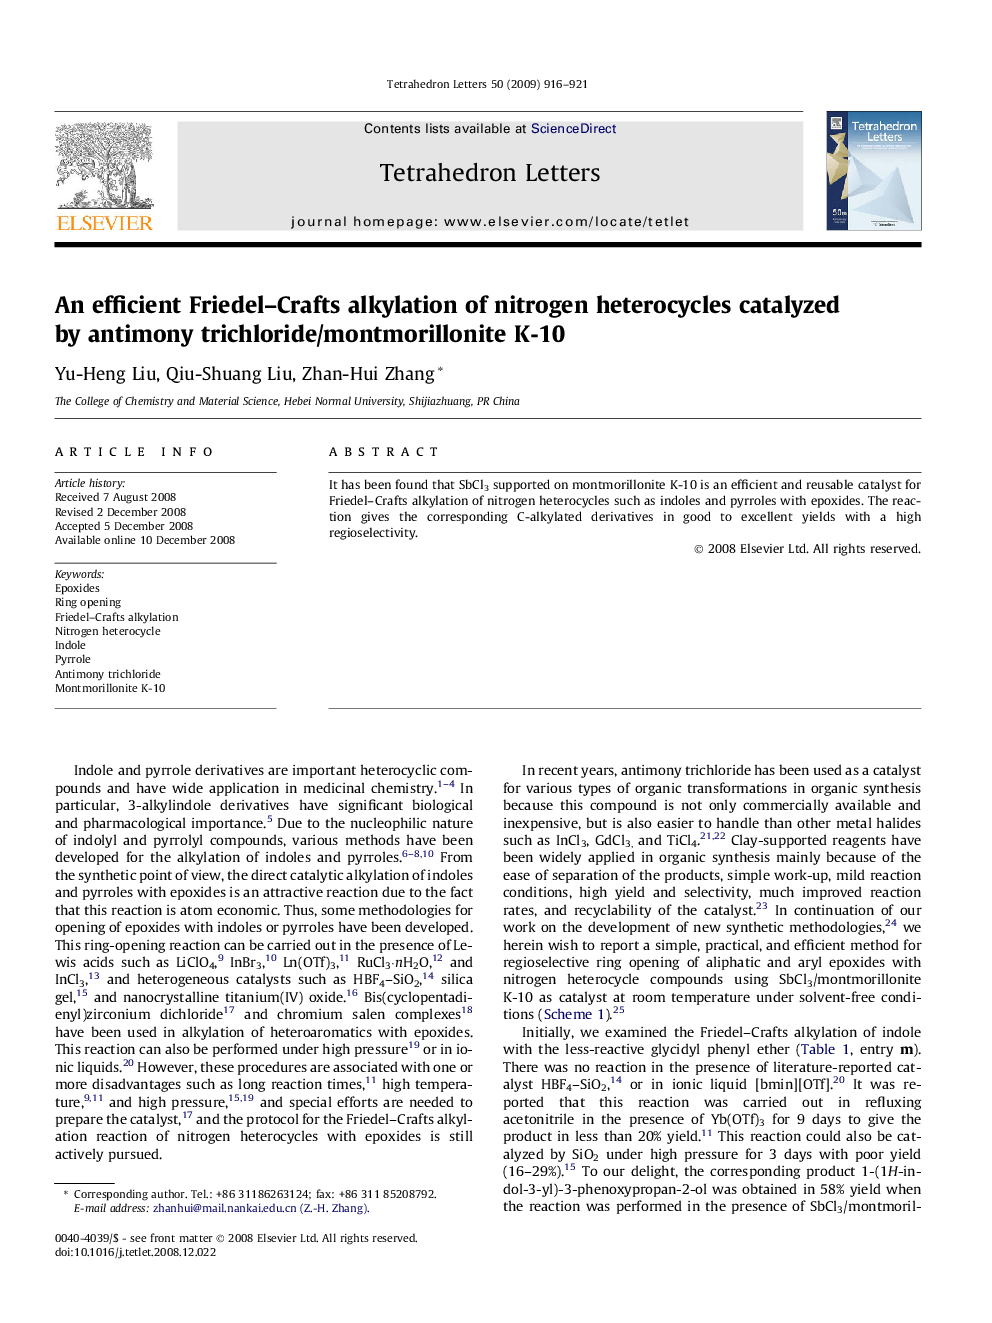 An efficient Friedel-Crafts alkylation of nitrogen heterocycles catalyzed by antimony trichloride/montmorillonite K-10